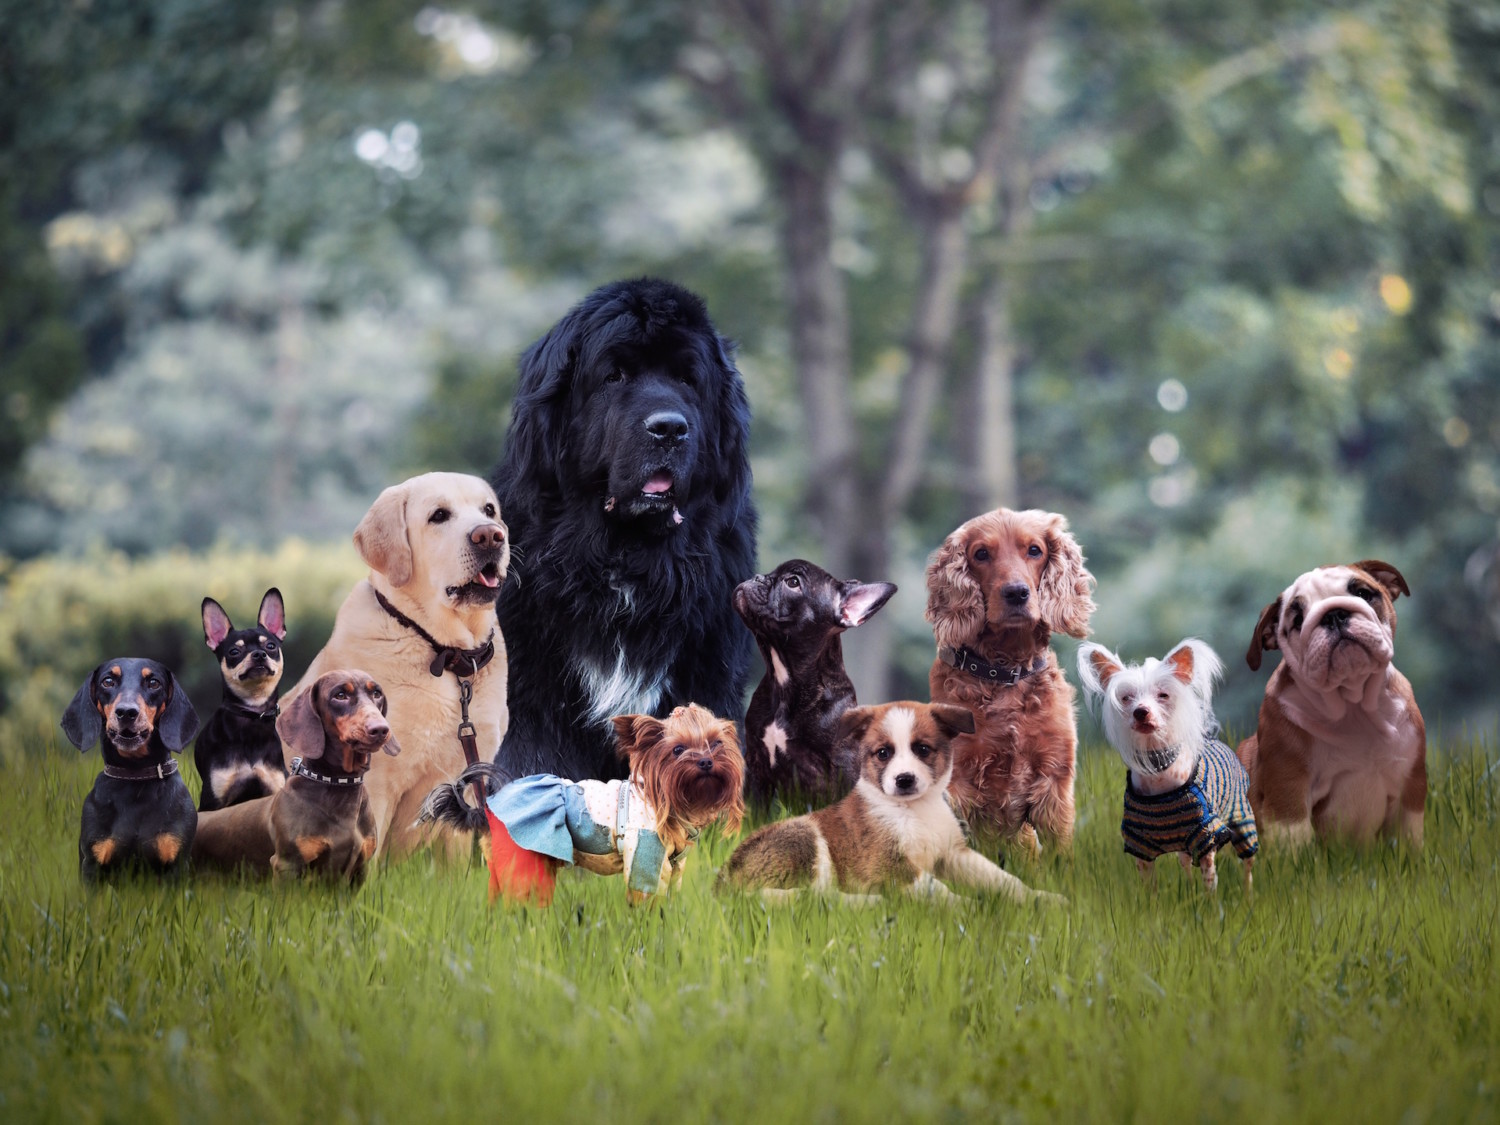 Newfoundland Dog Photos Show How Massive They Are - Simplemost1500 x 1125